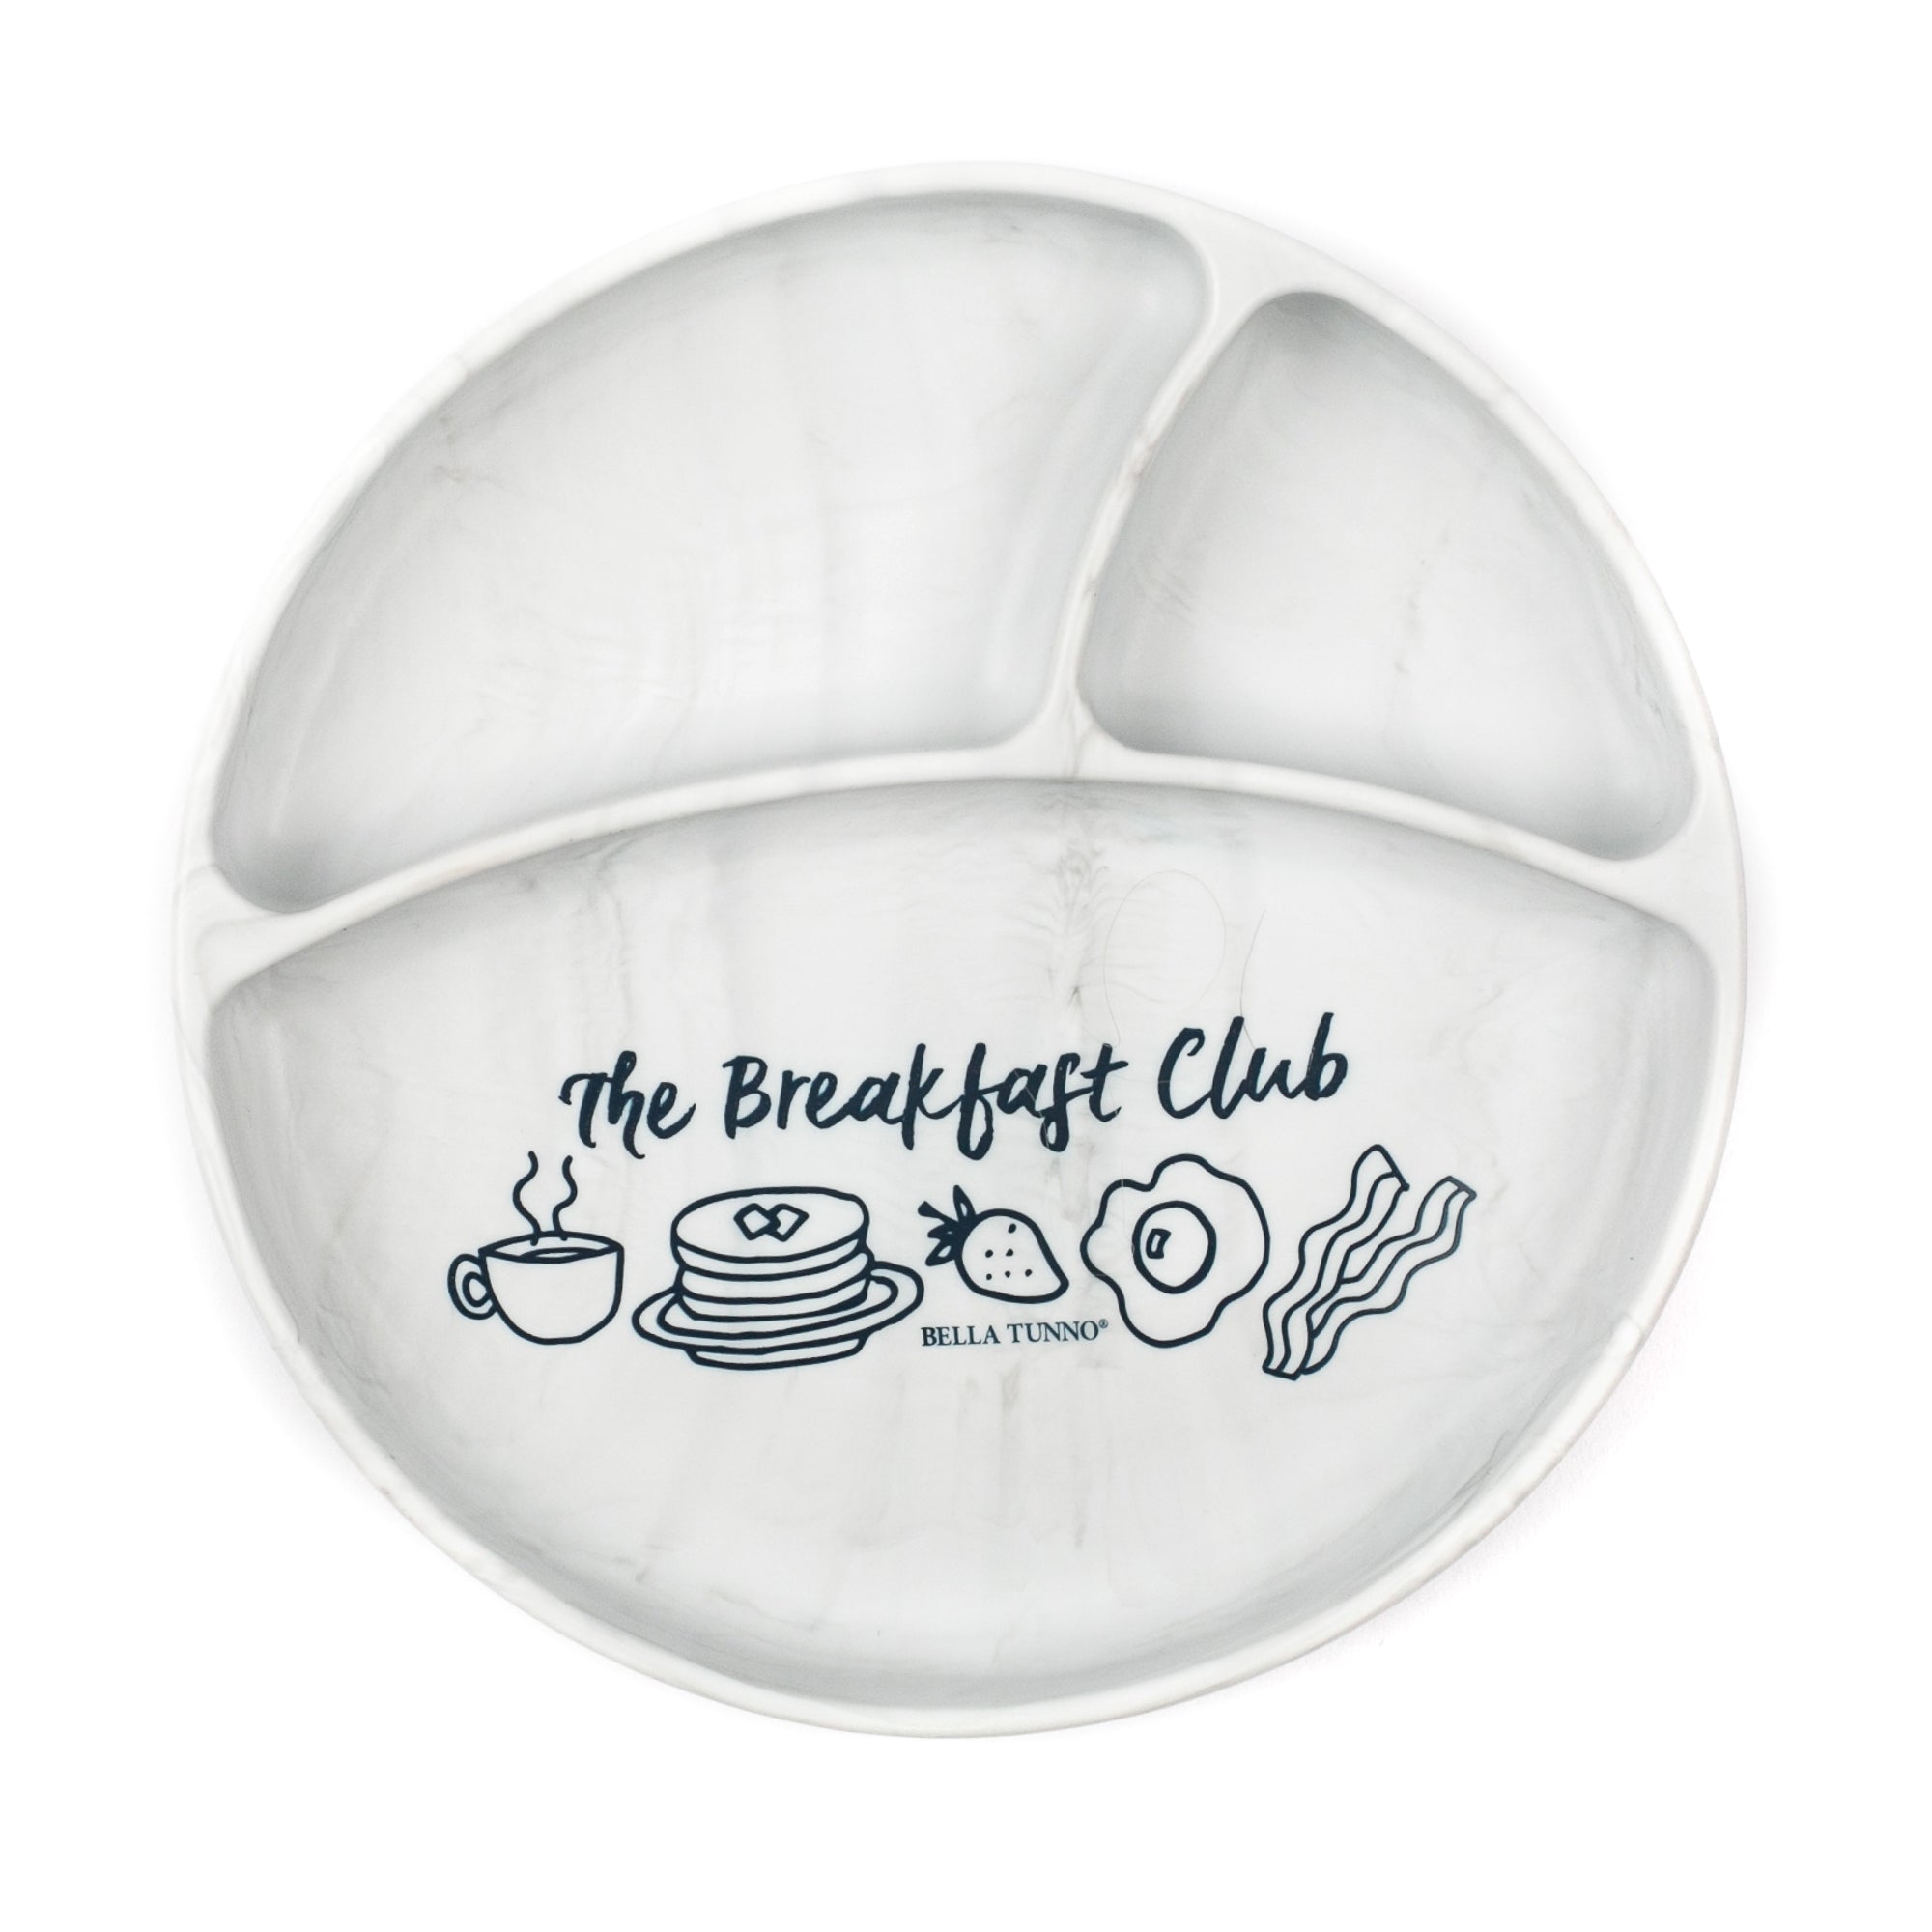 "The Breakfast Club" Wonder Plate